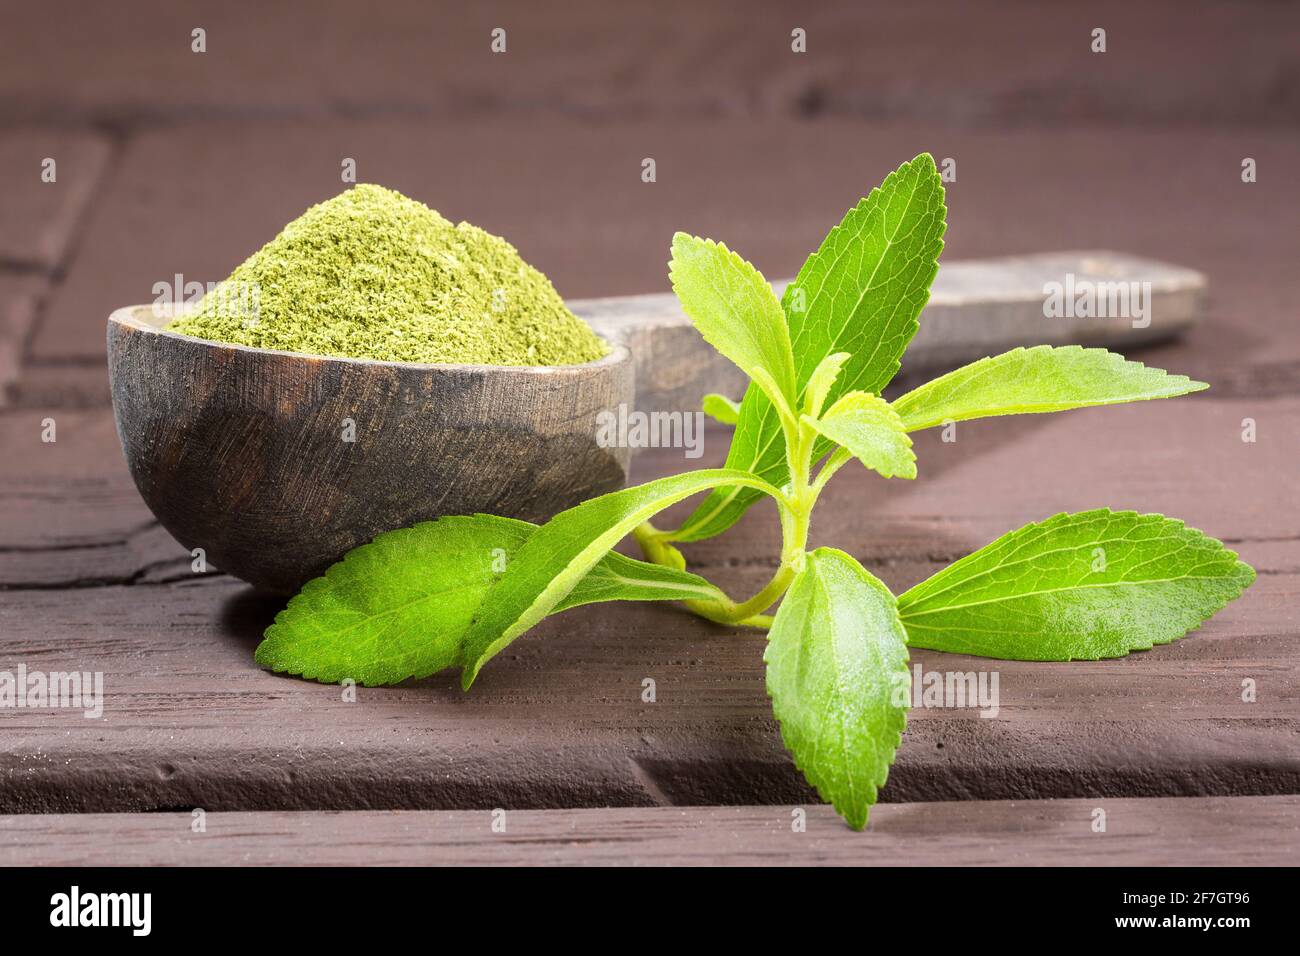 Natural sweetener powder from stevia plant - Stevia rebaudiana. Wooden background Photo - Alamy